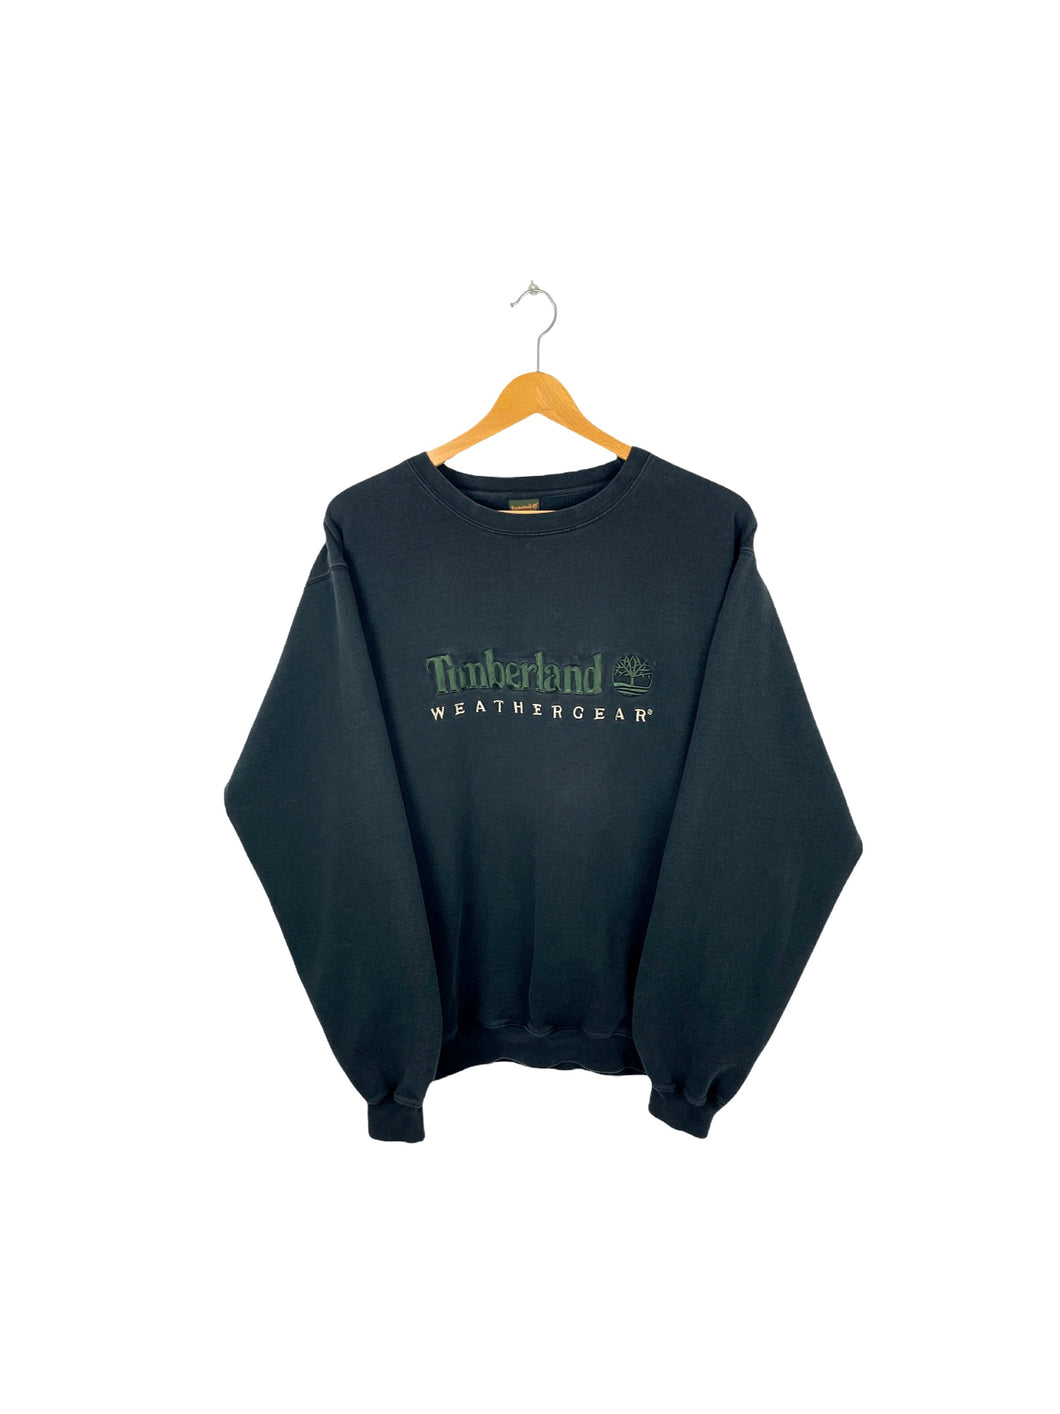 Timberland Sweatshirt - Medium